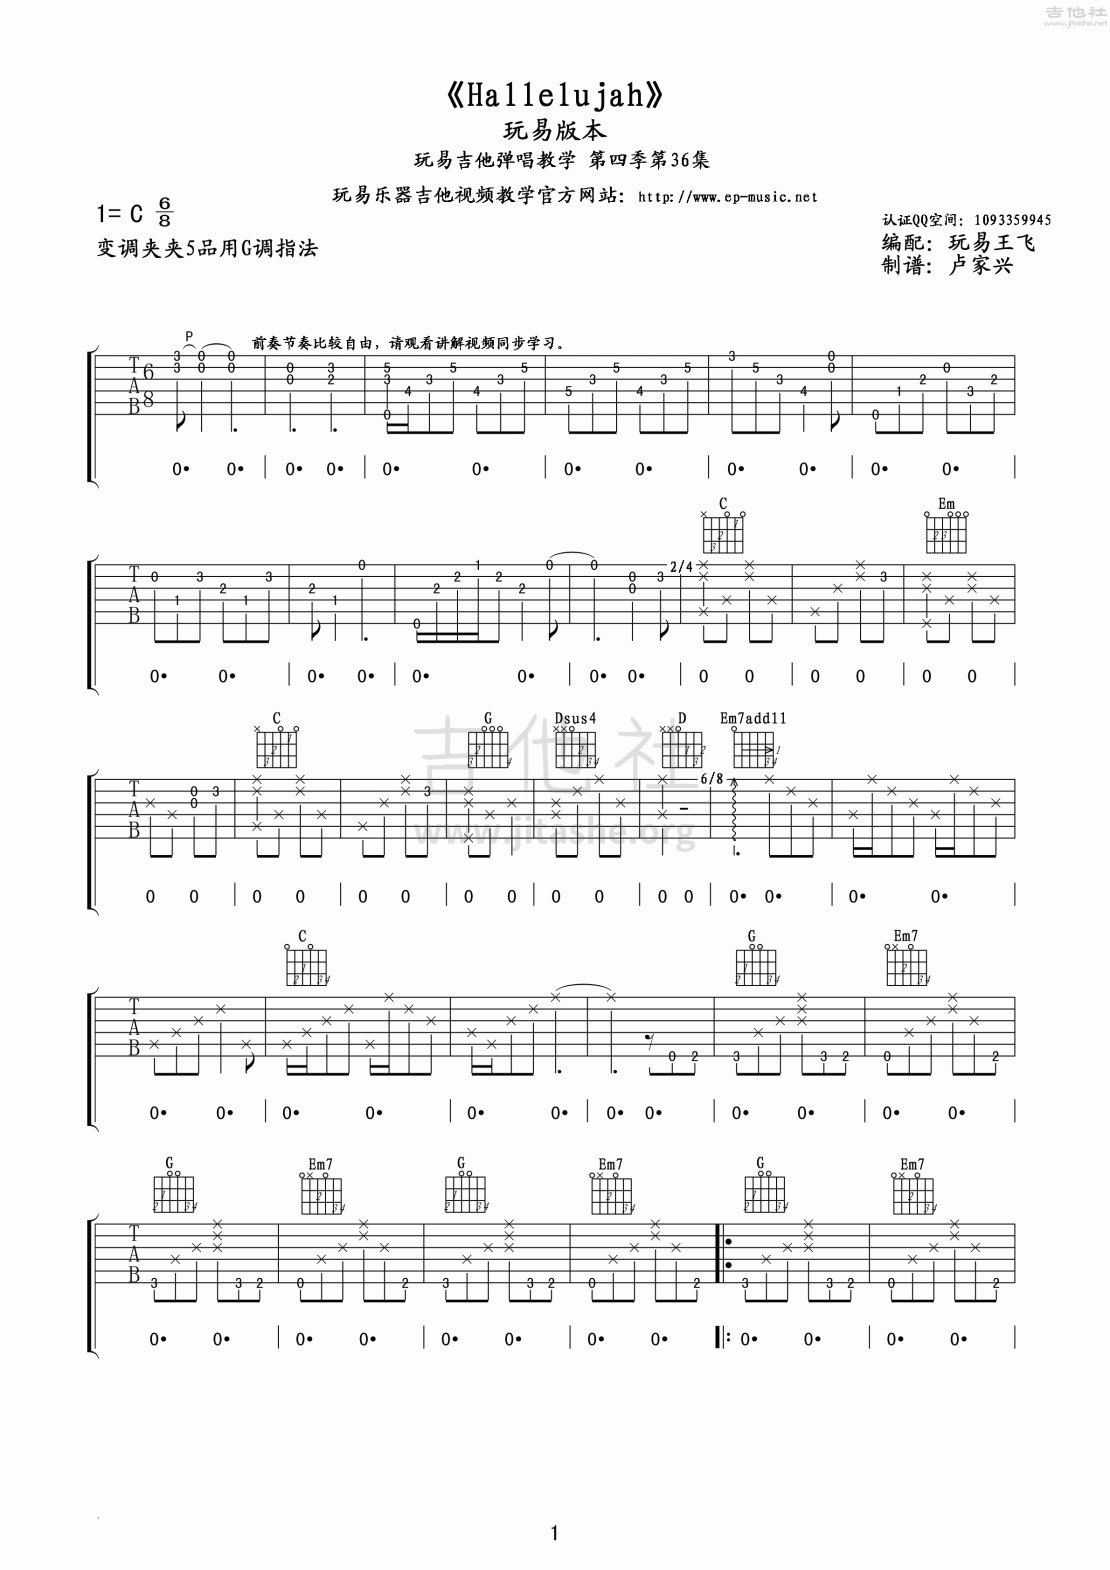 Hallelujah(哈利路亚)(玩易吉他弹唱教程:第四季第36集)吉他谱(图片谱,玩易吉他弹唱教程,弹唱,教程)_Jeff Buckley(杰夫·巴克利)_第四季第36集《Hallelujah》01.gif